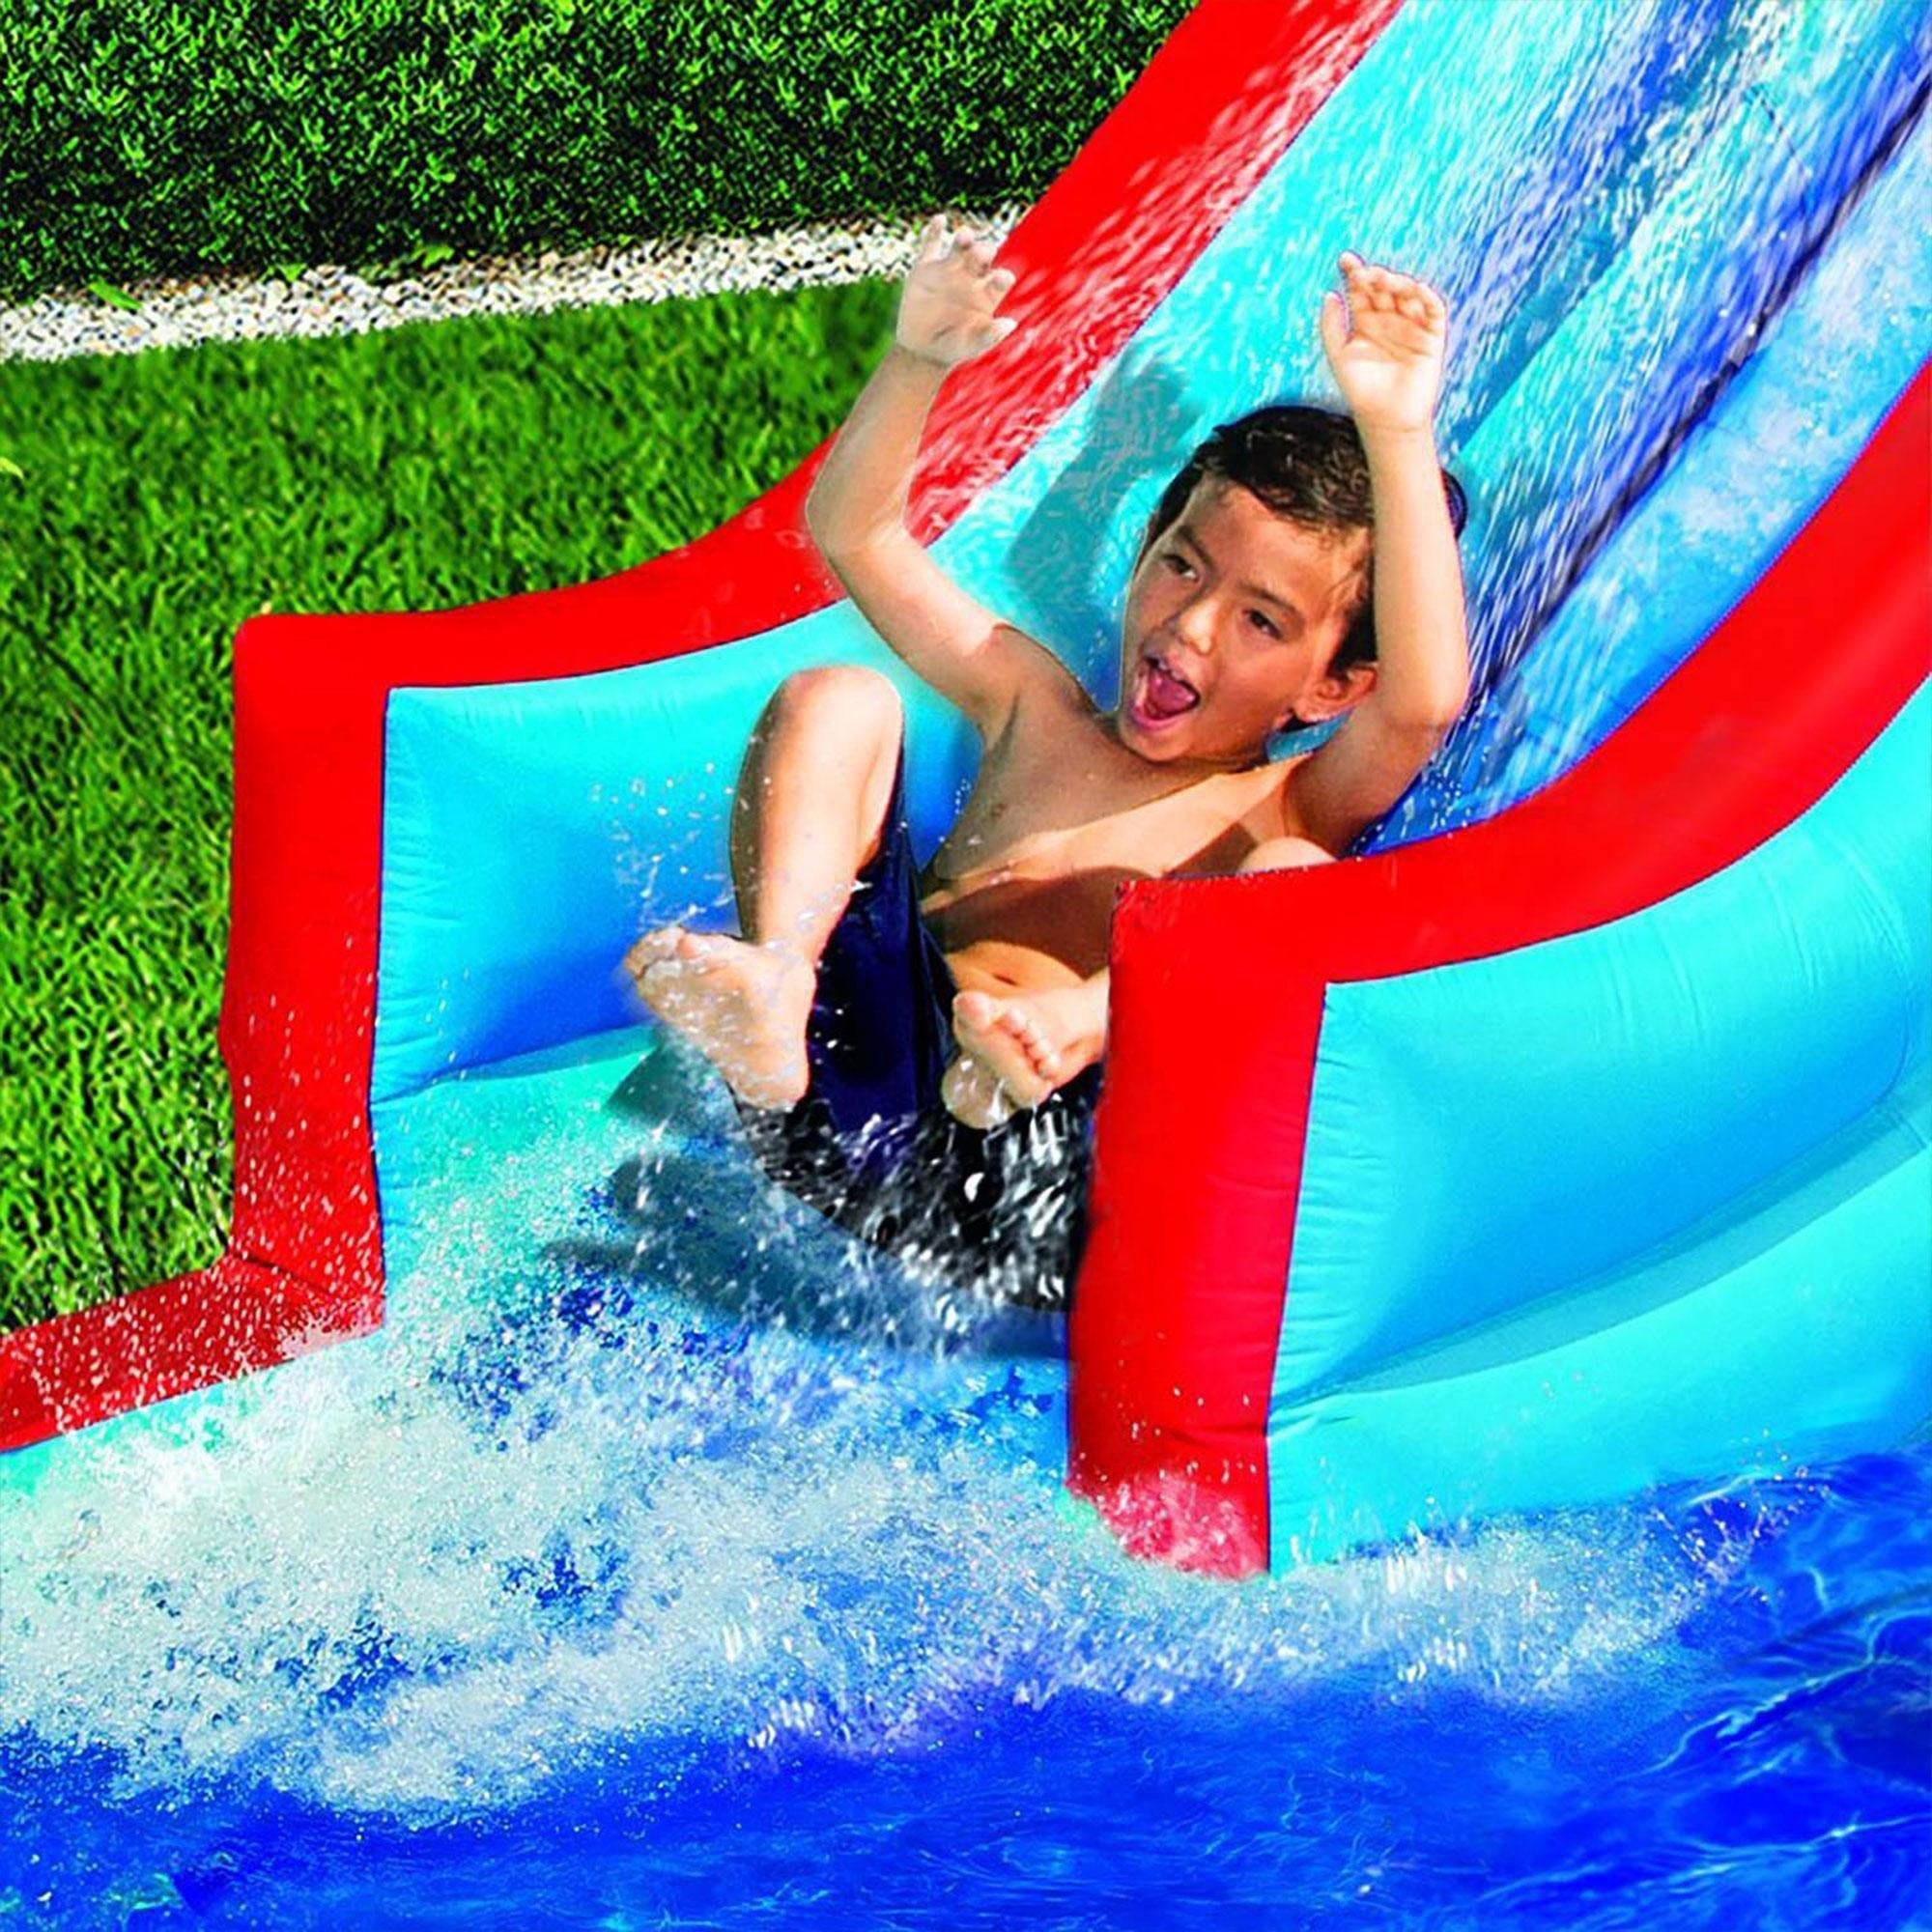 Slide N' Soak Inflatable Outdoor Water Park Play Center - Bargainwizz